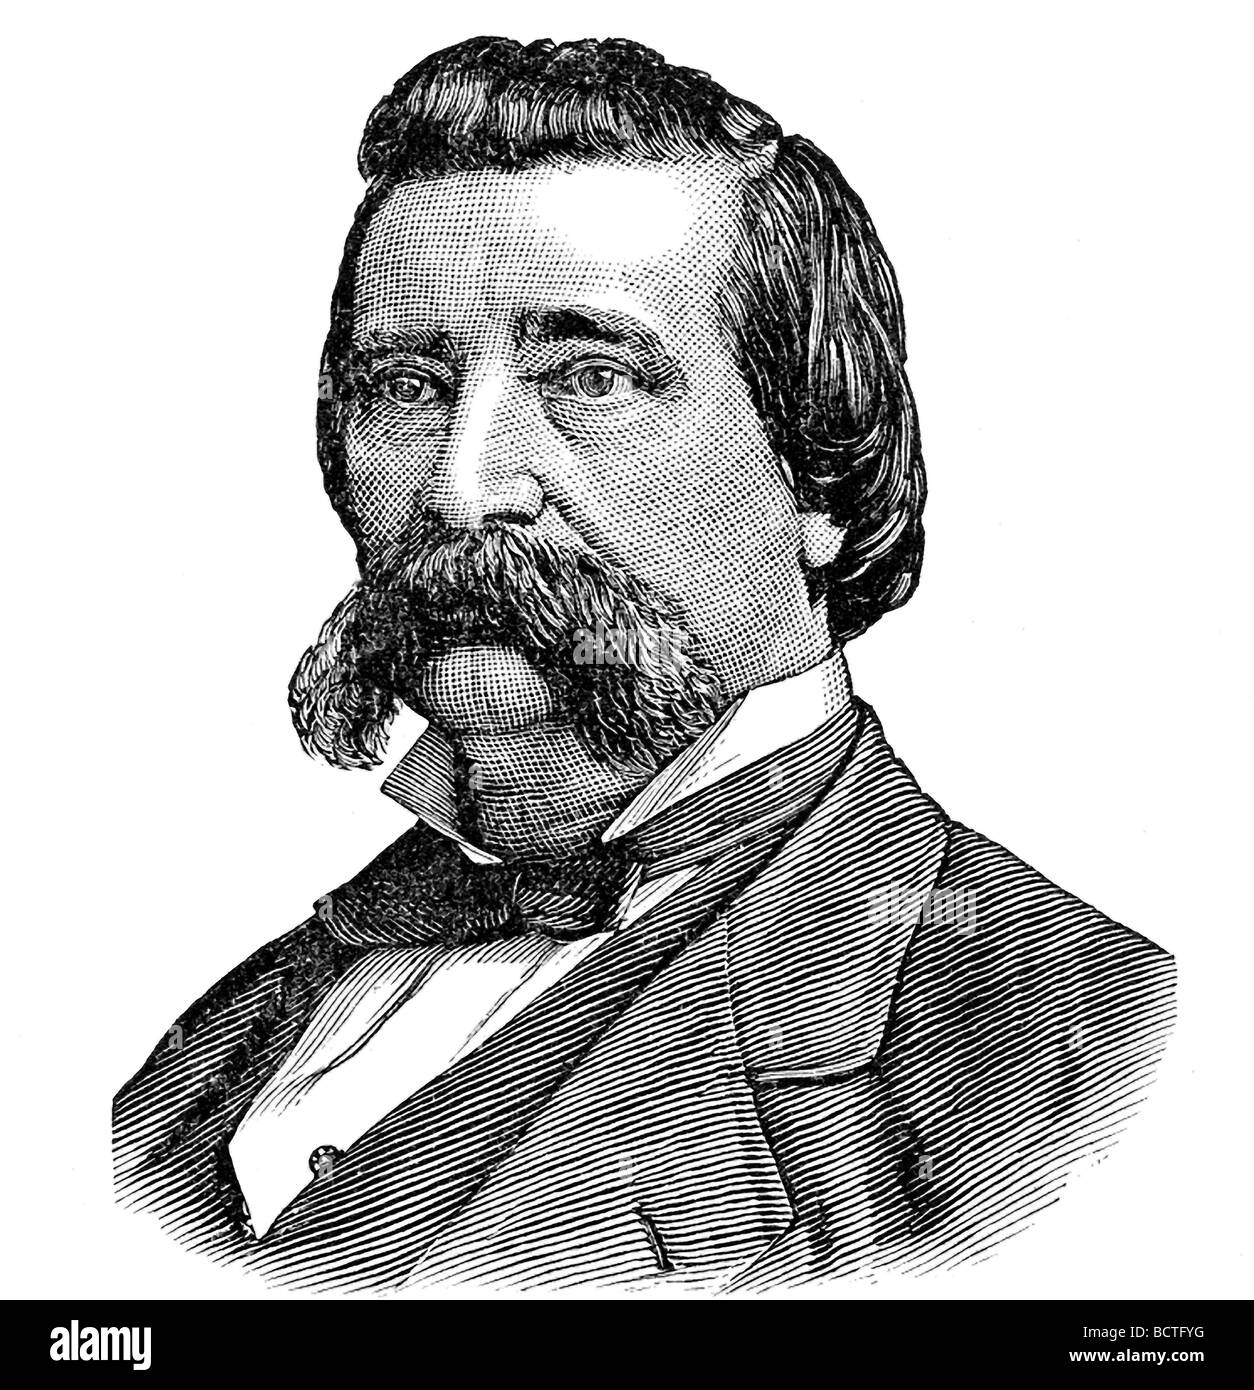 John <b>Alexander Logan</b> (1826 -1886) was an American politician, and he served - john-alexander-logan-1826-1886-was-an-american-politician-and-he-served-BCTFYG